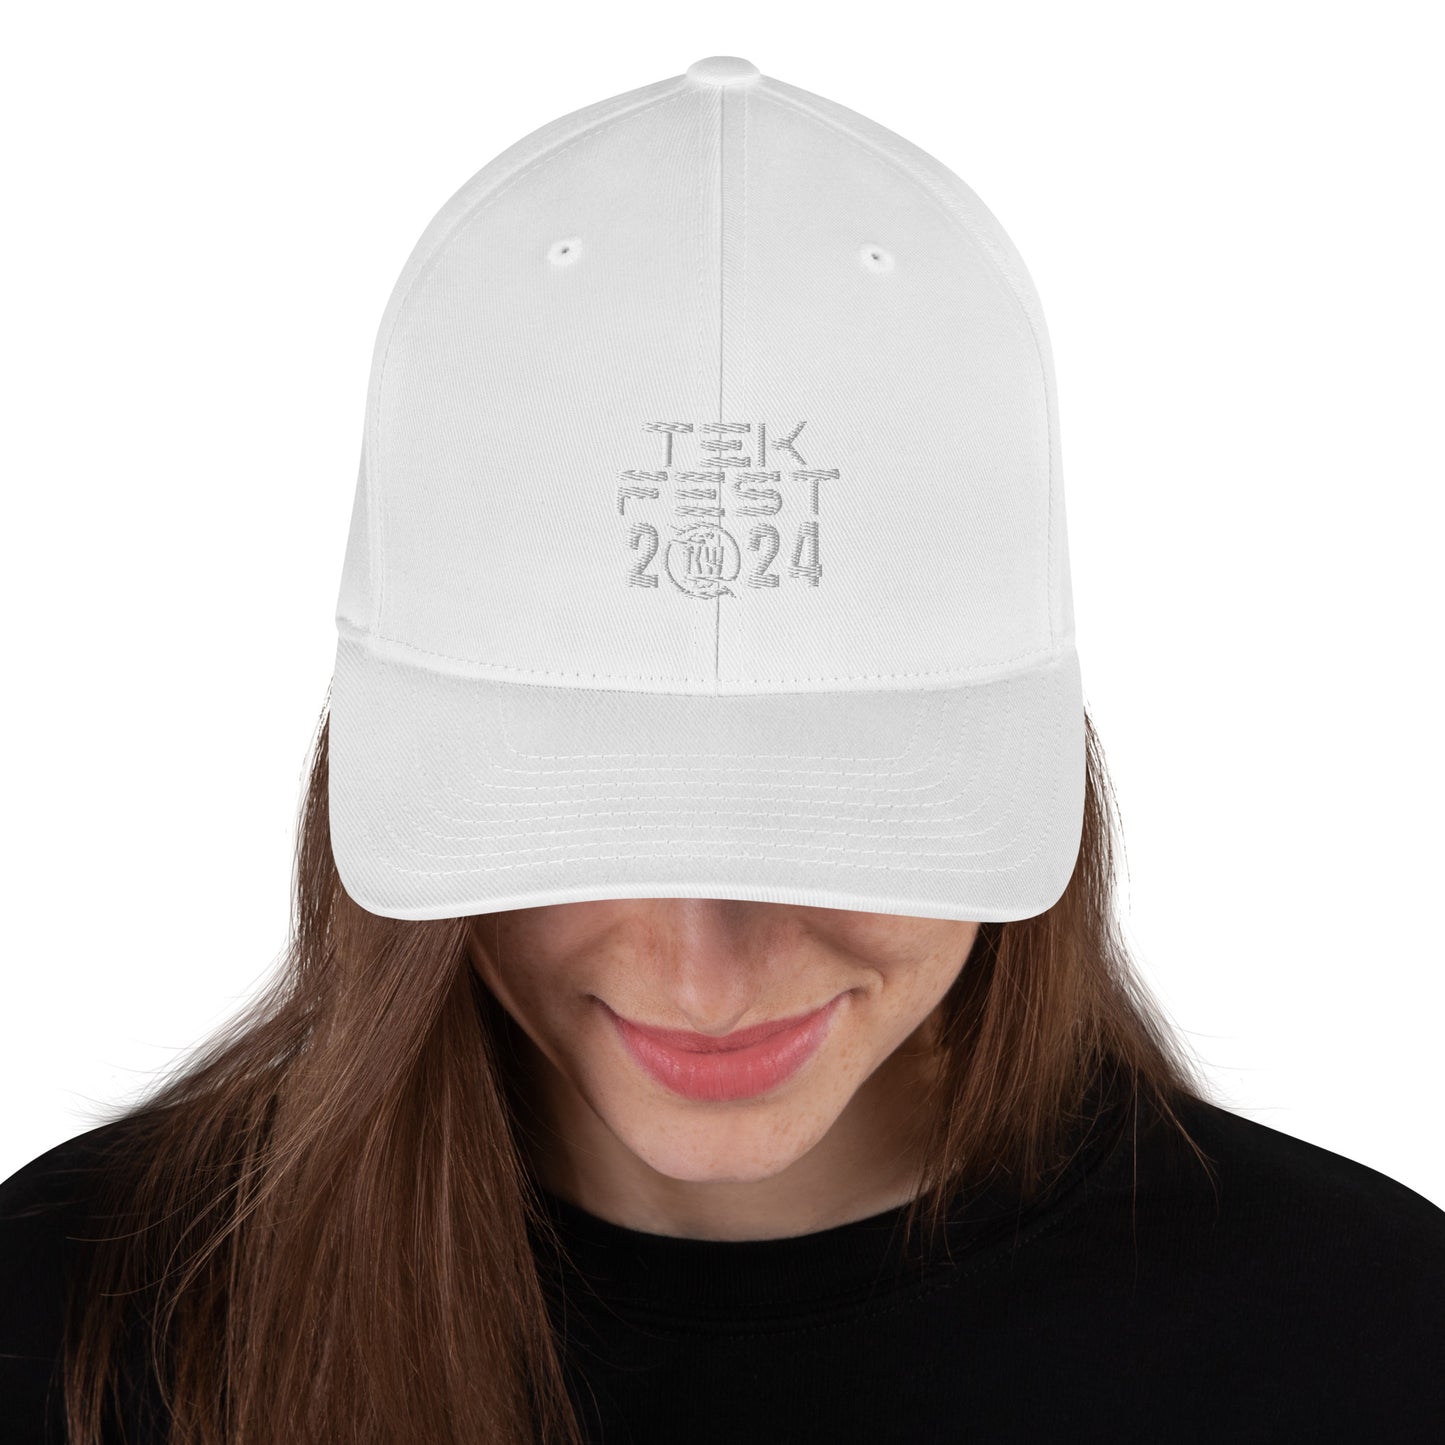 TEKFest24 WhiteOut FlexFit Hat